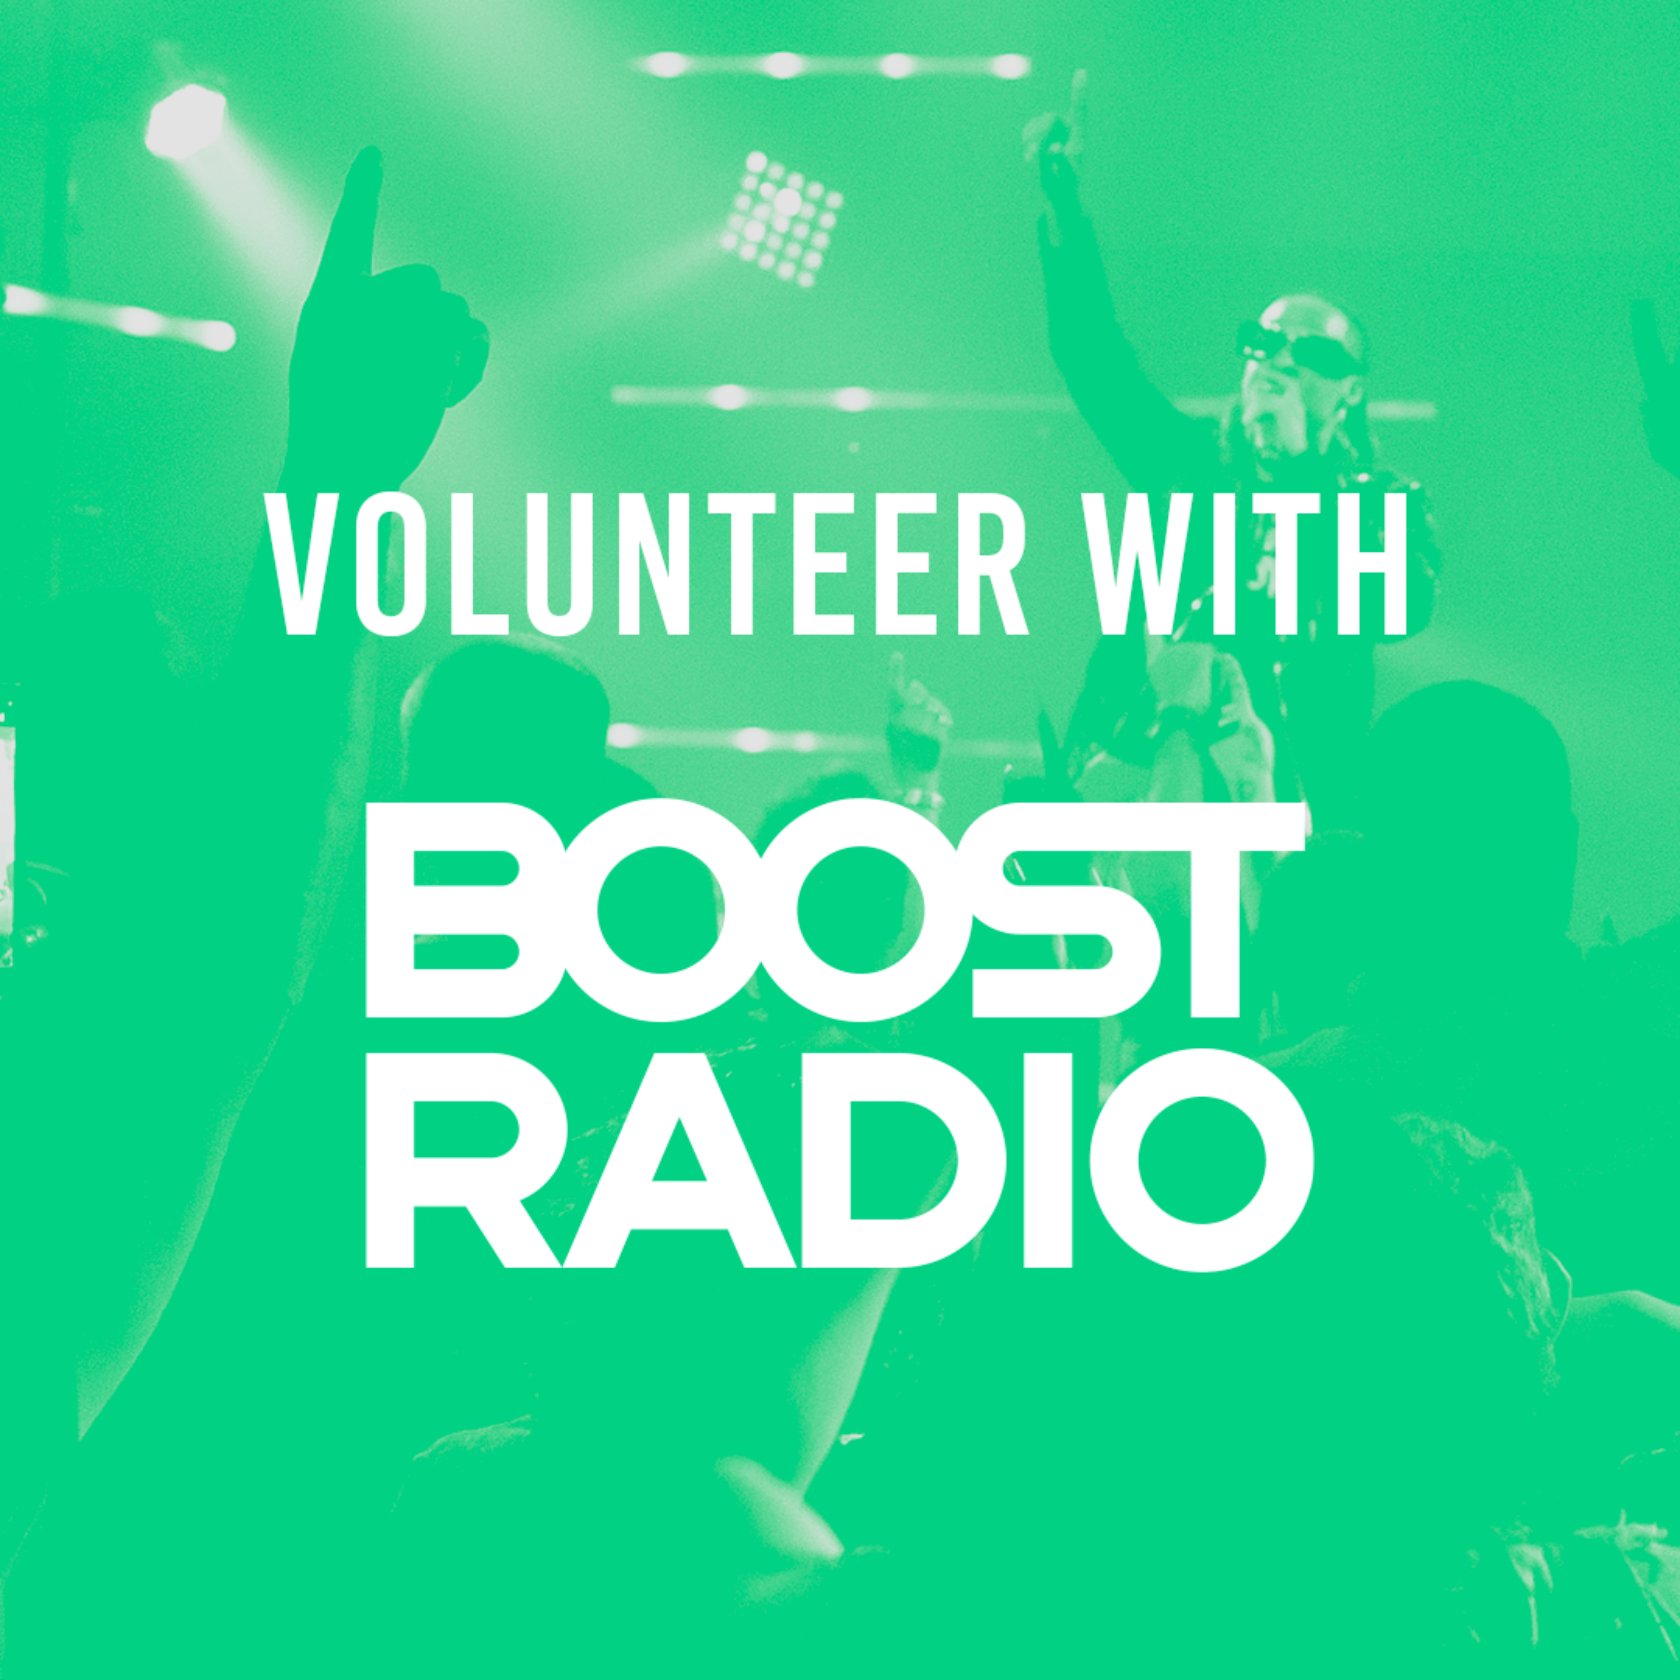 Volunteer with BOOST RADIO